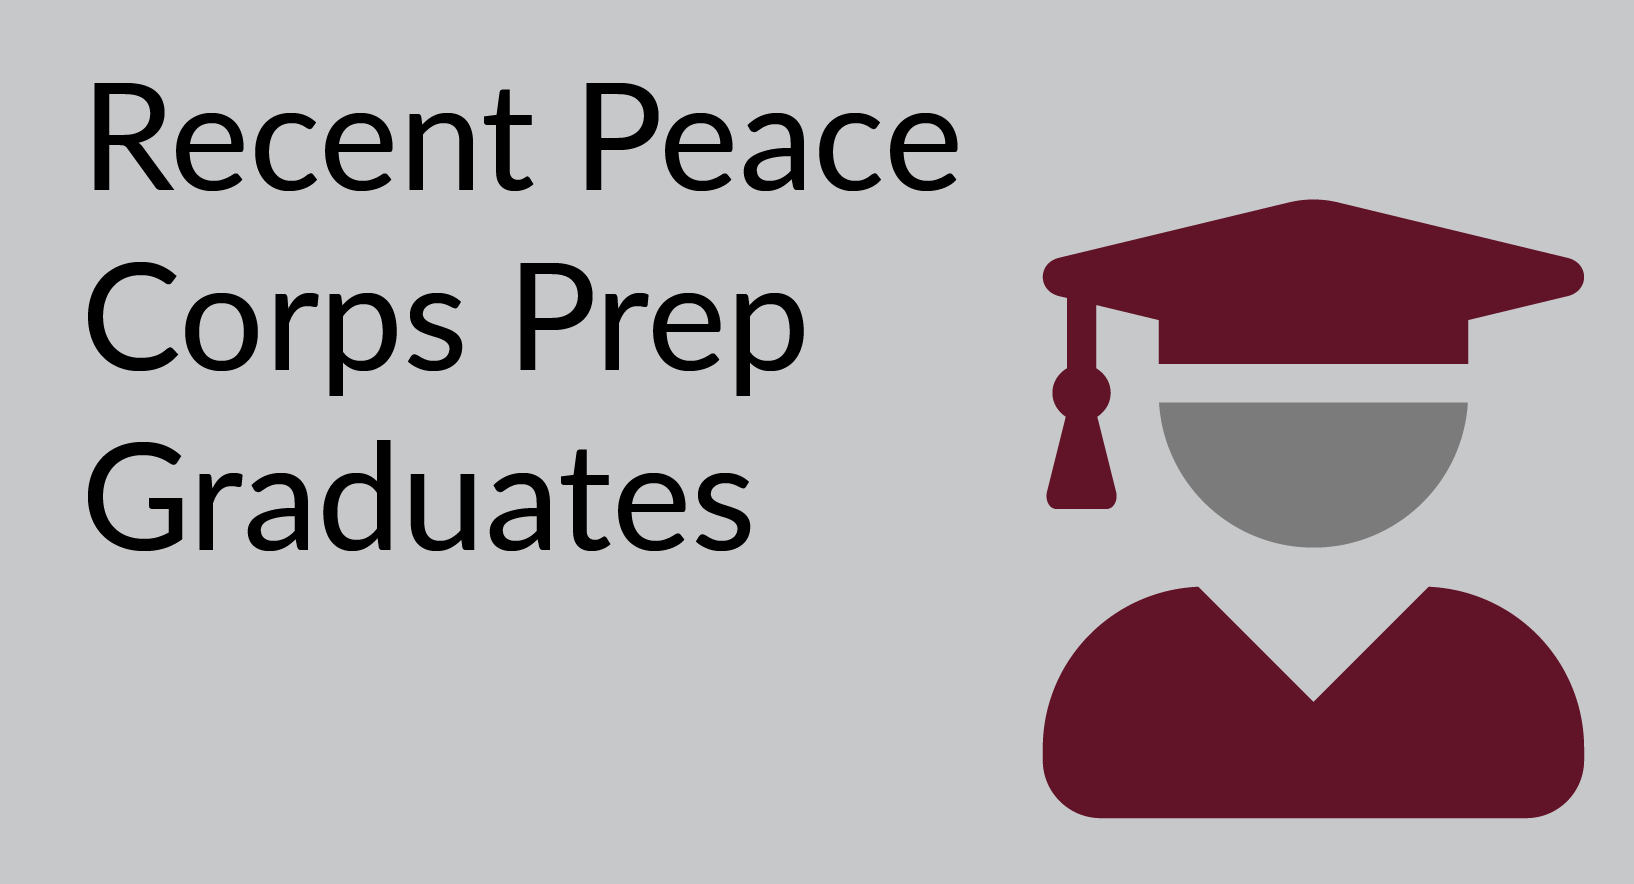 Recent Peace Corps Prep Graduates